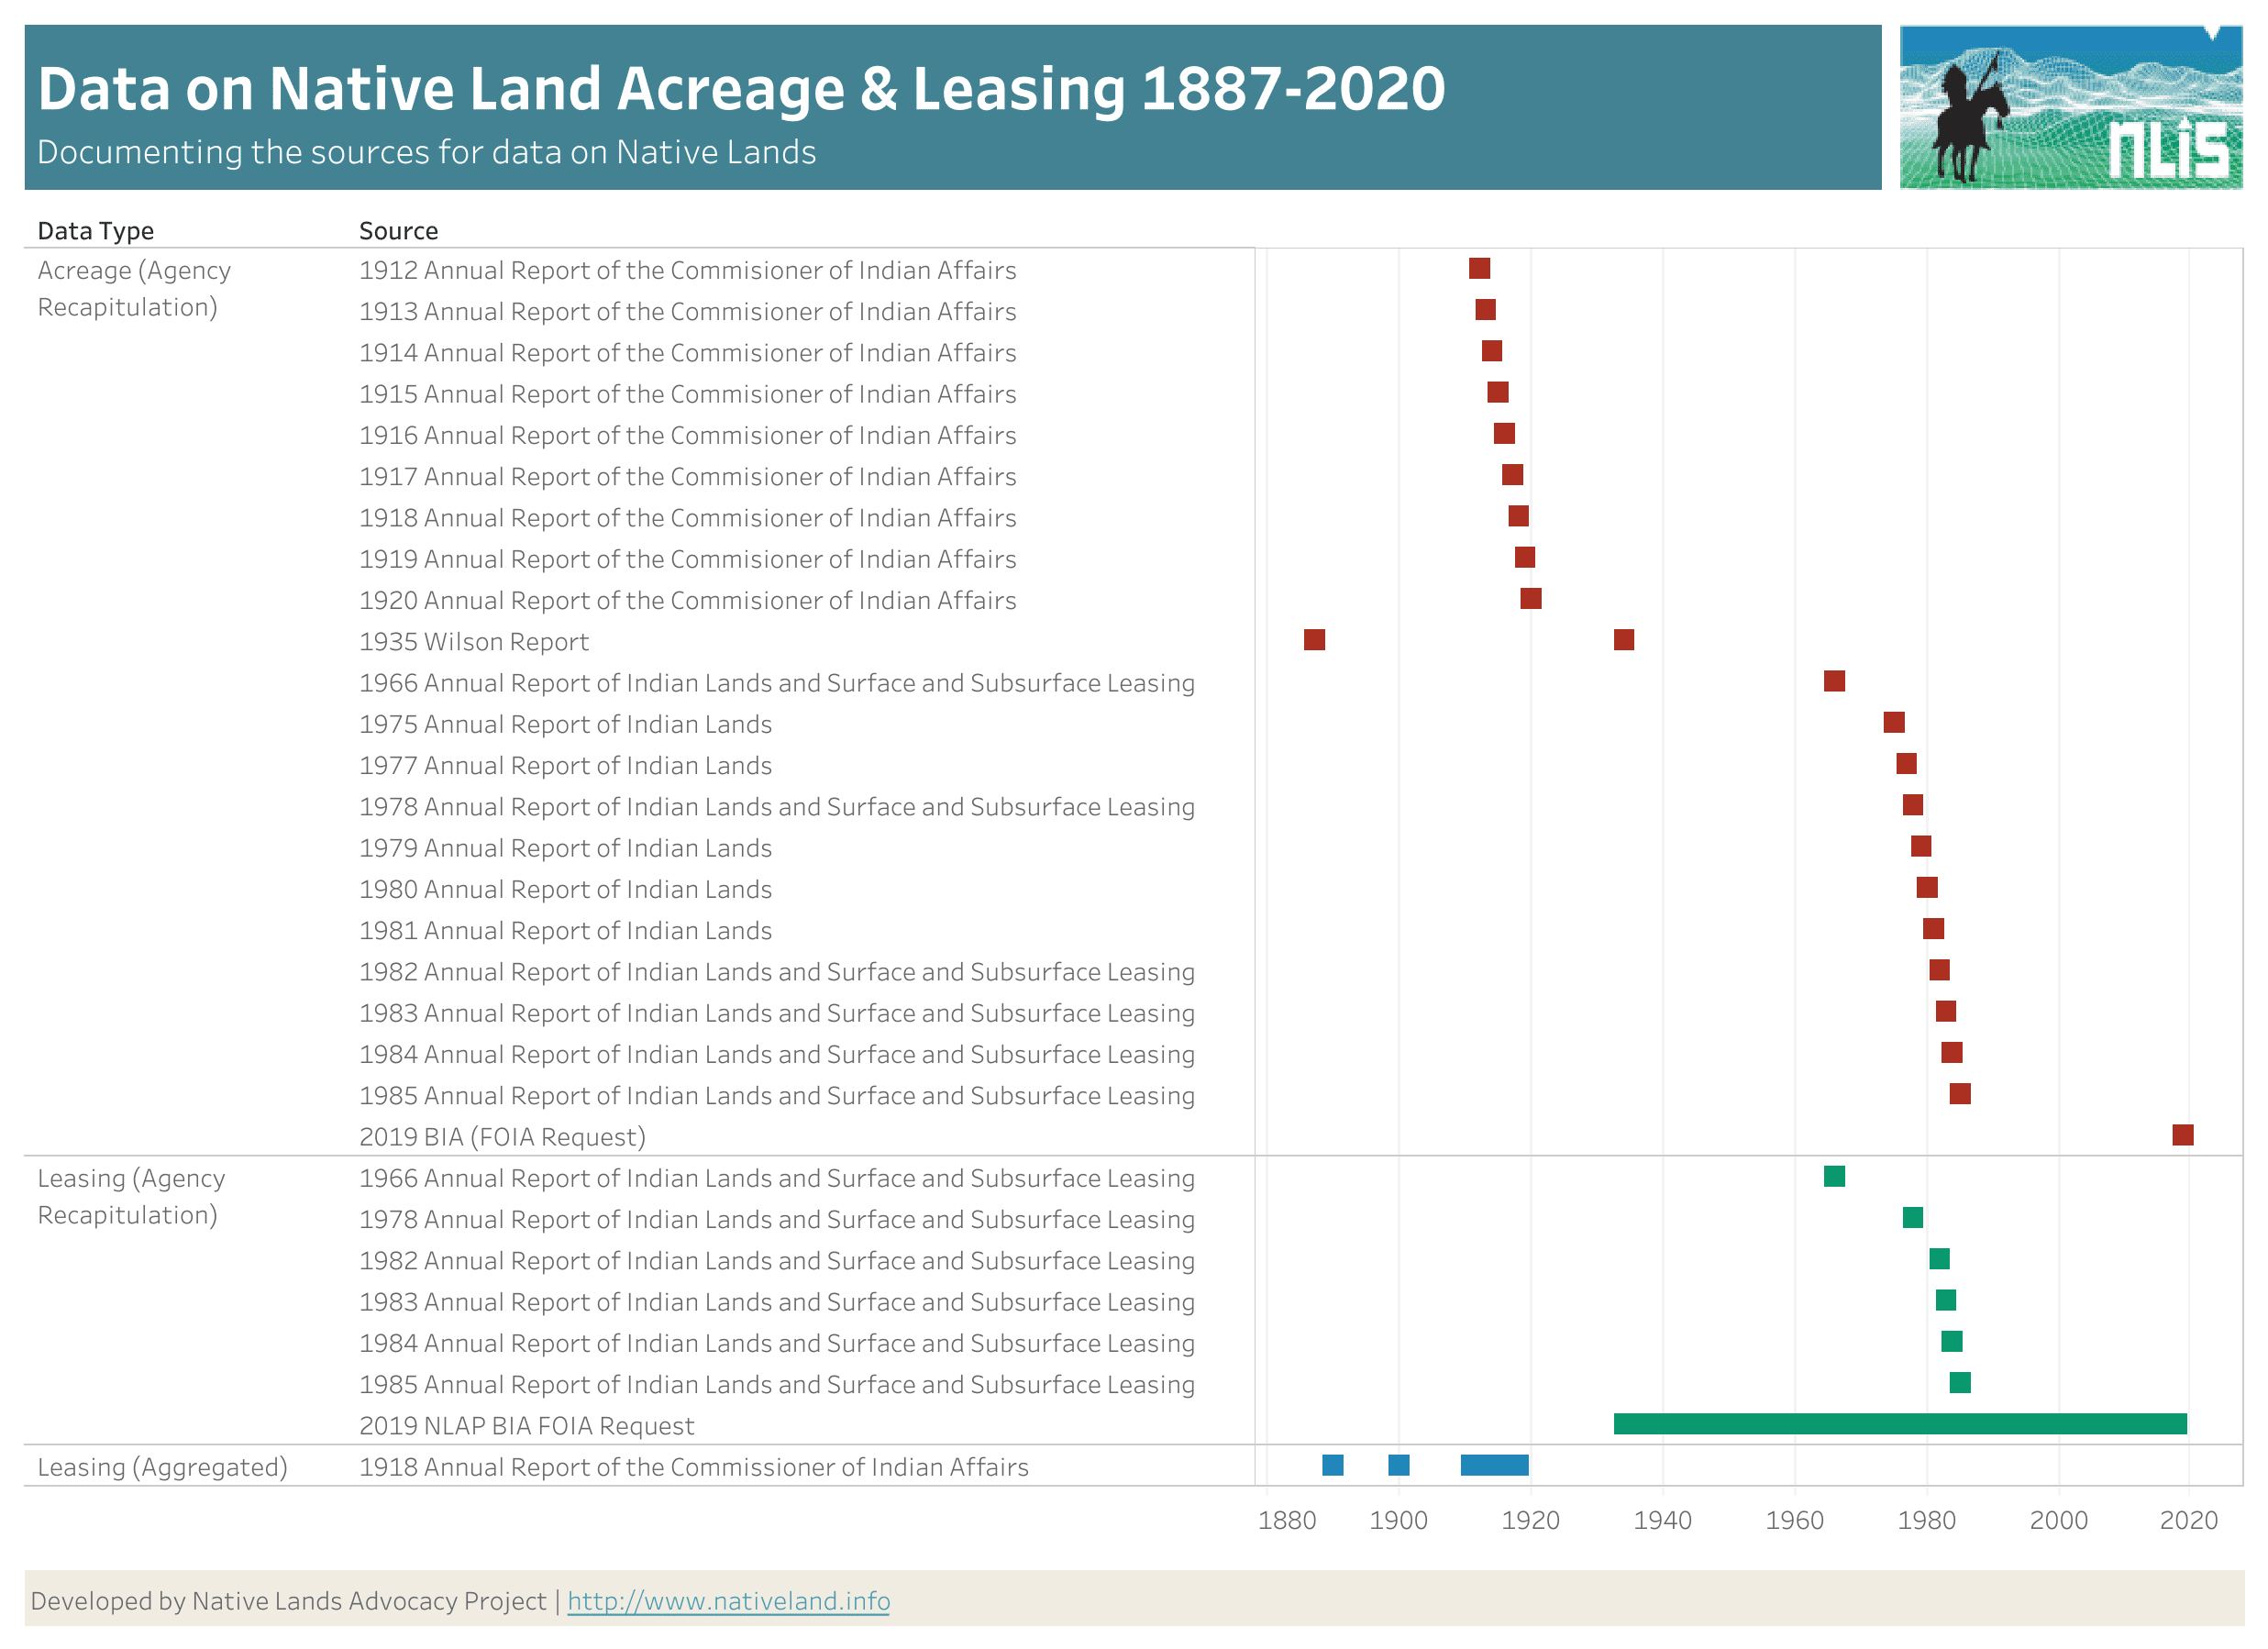 Data on Native Land Acreage and Leasing